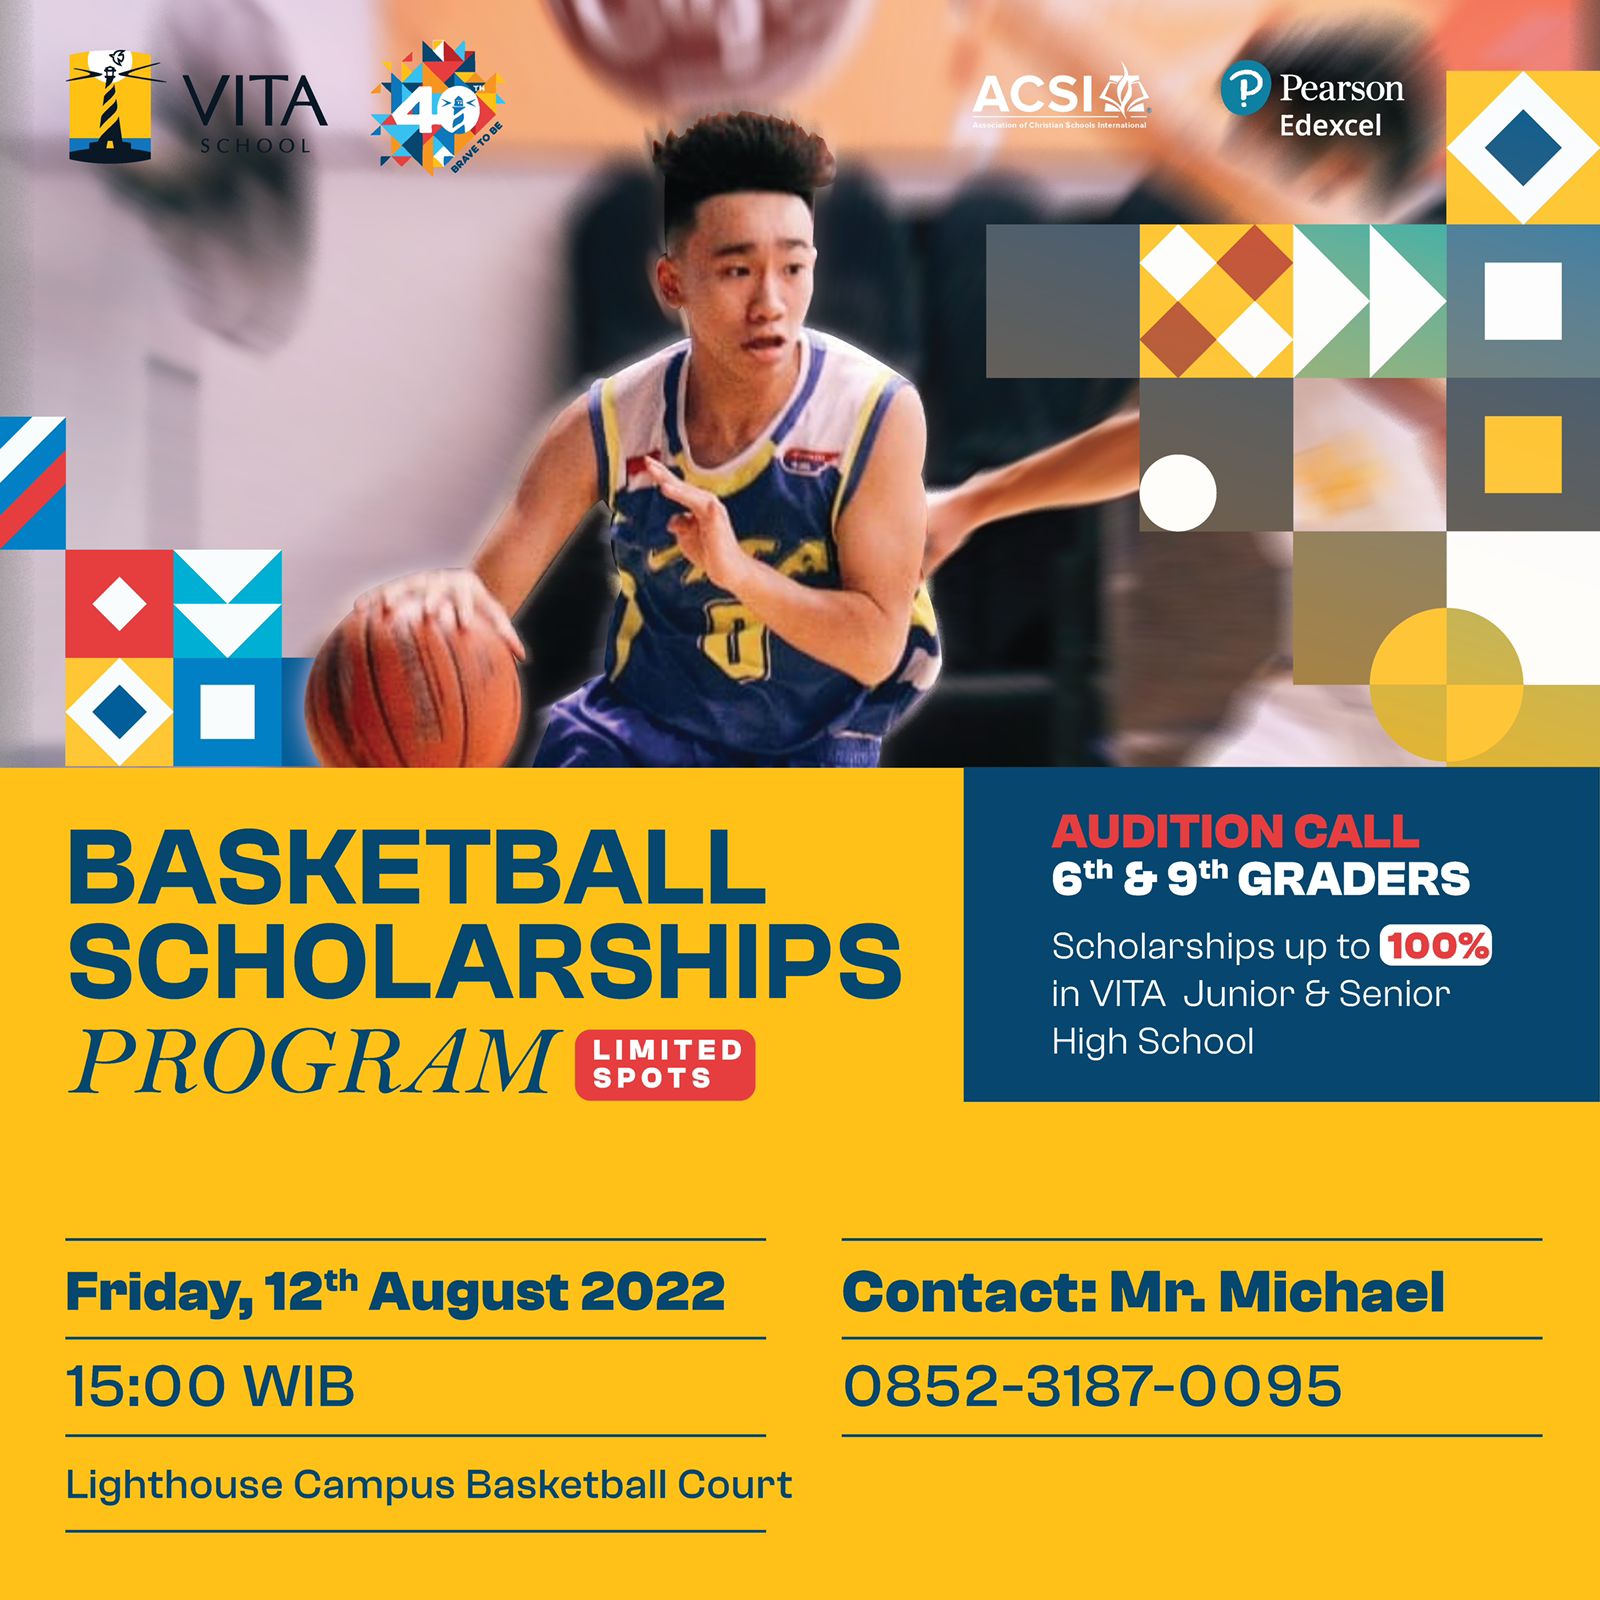 VITA School Basketball Scholarship Program